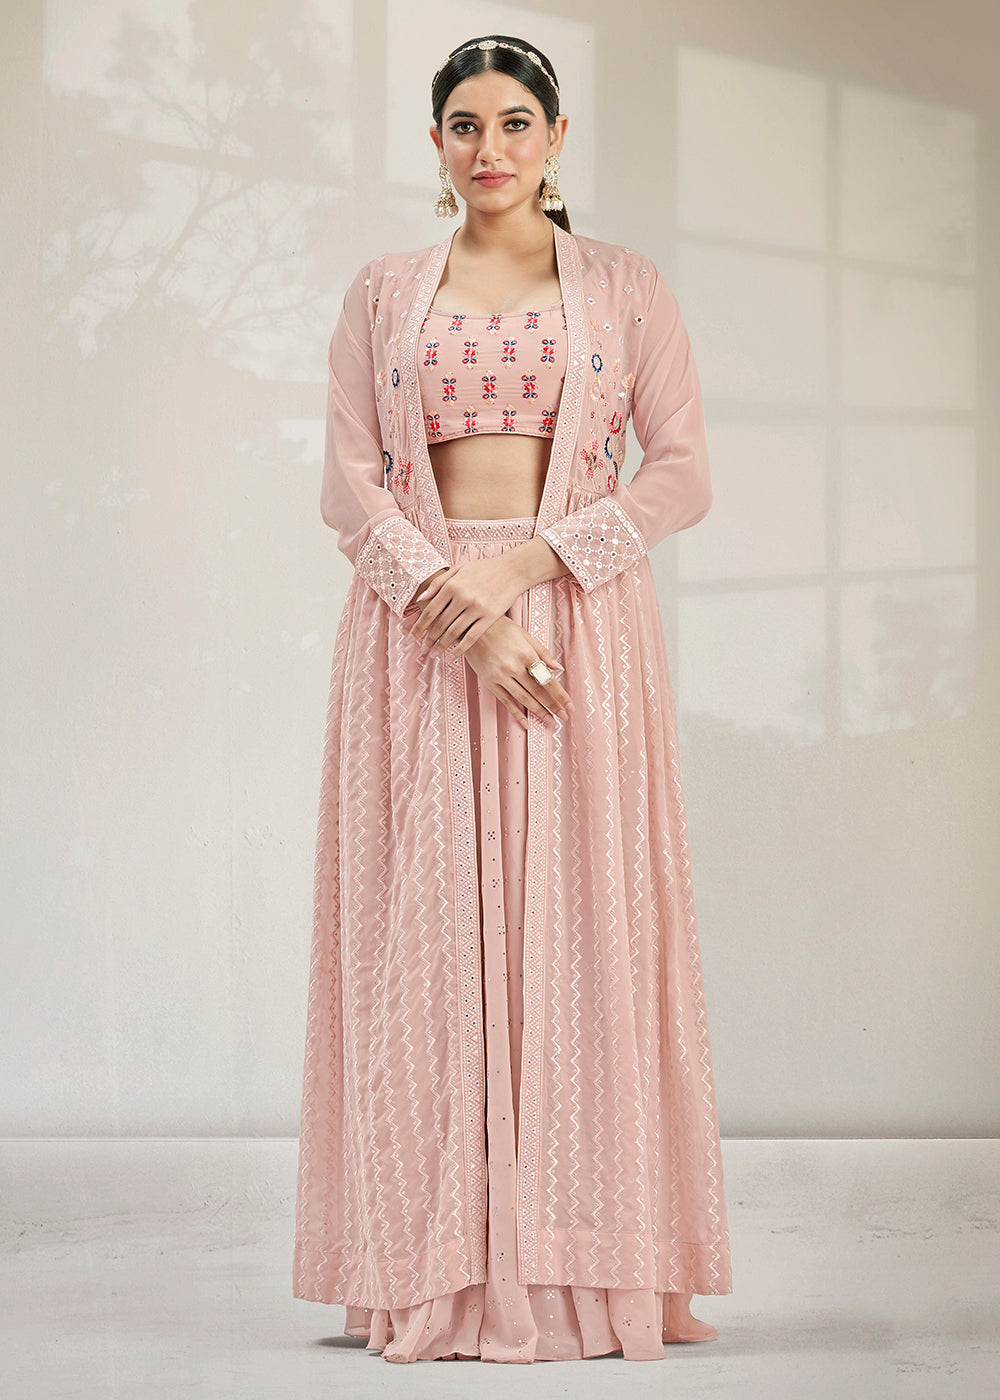 Shop Now Dazzling Party Style Seashell Pink Lehenga Choli with Jacket Online in USA, UK, Canada & Worldwide at Empress Clothing. 